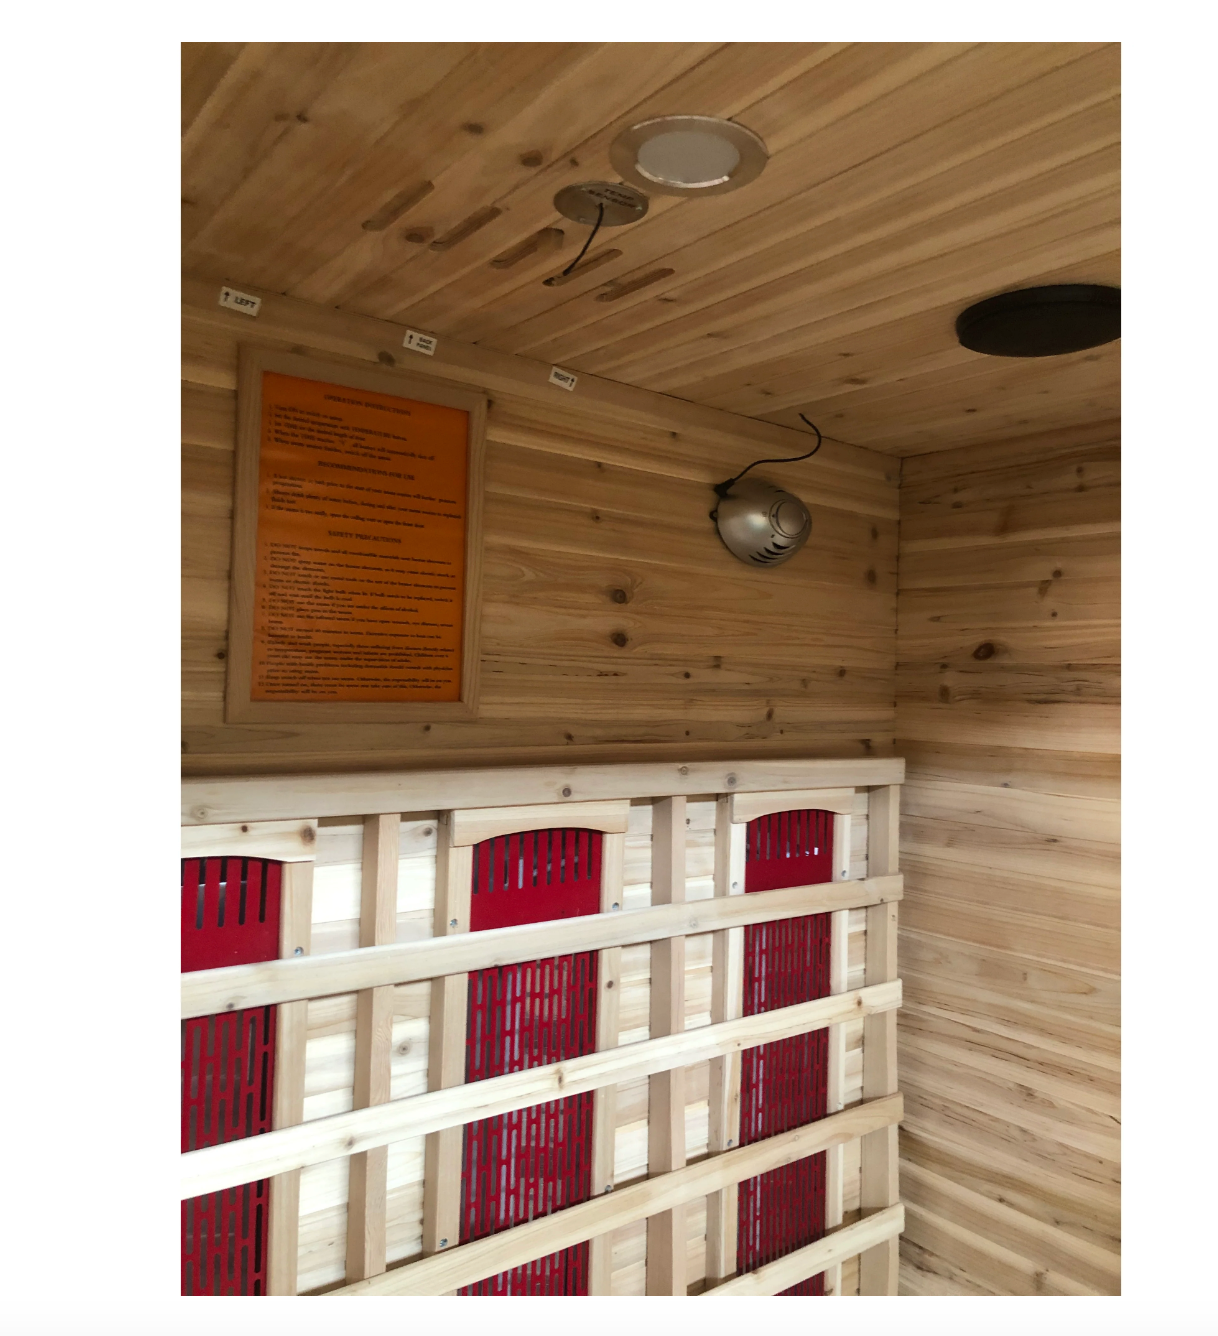 Grandby 300D outdoor infrared sauna